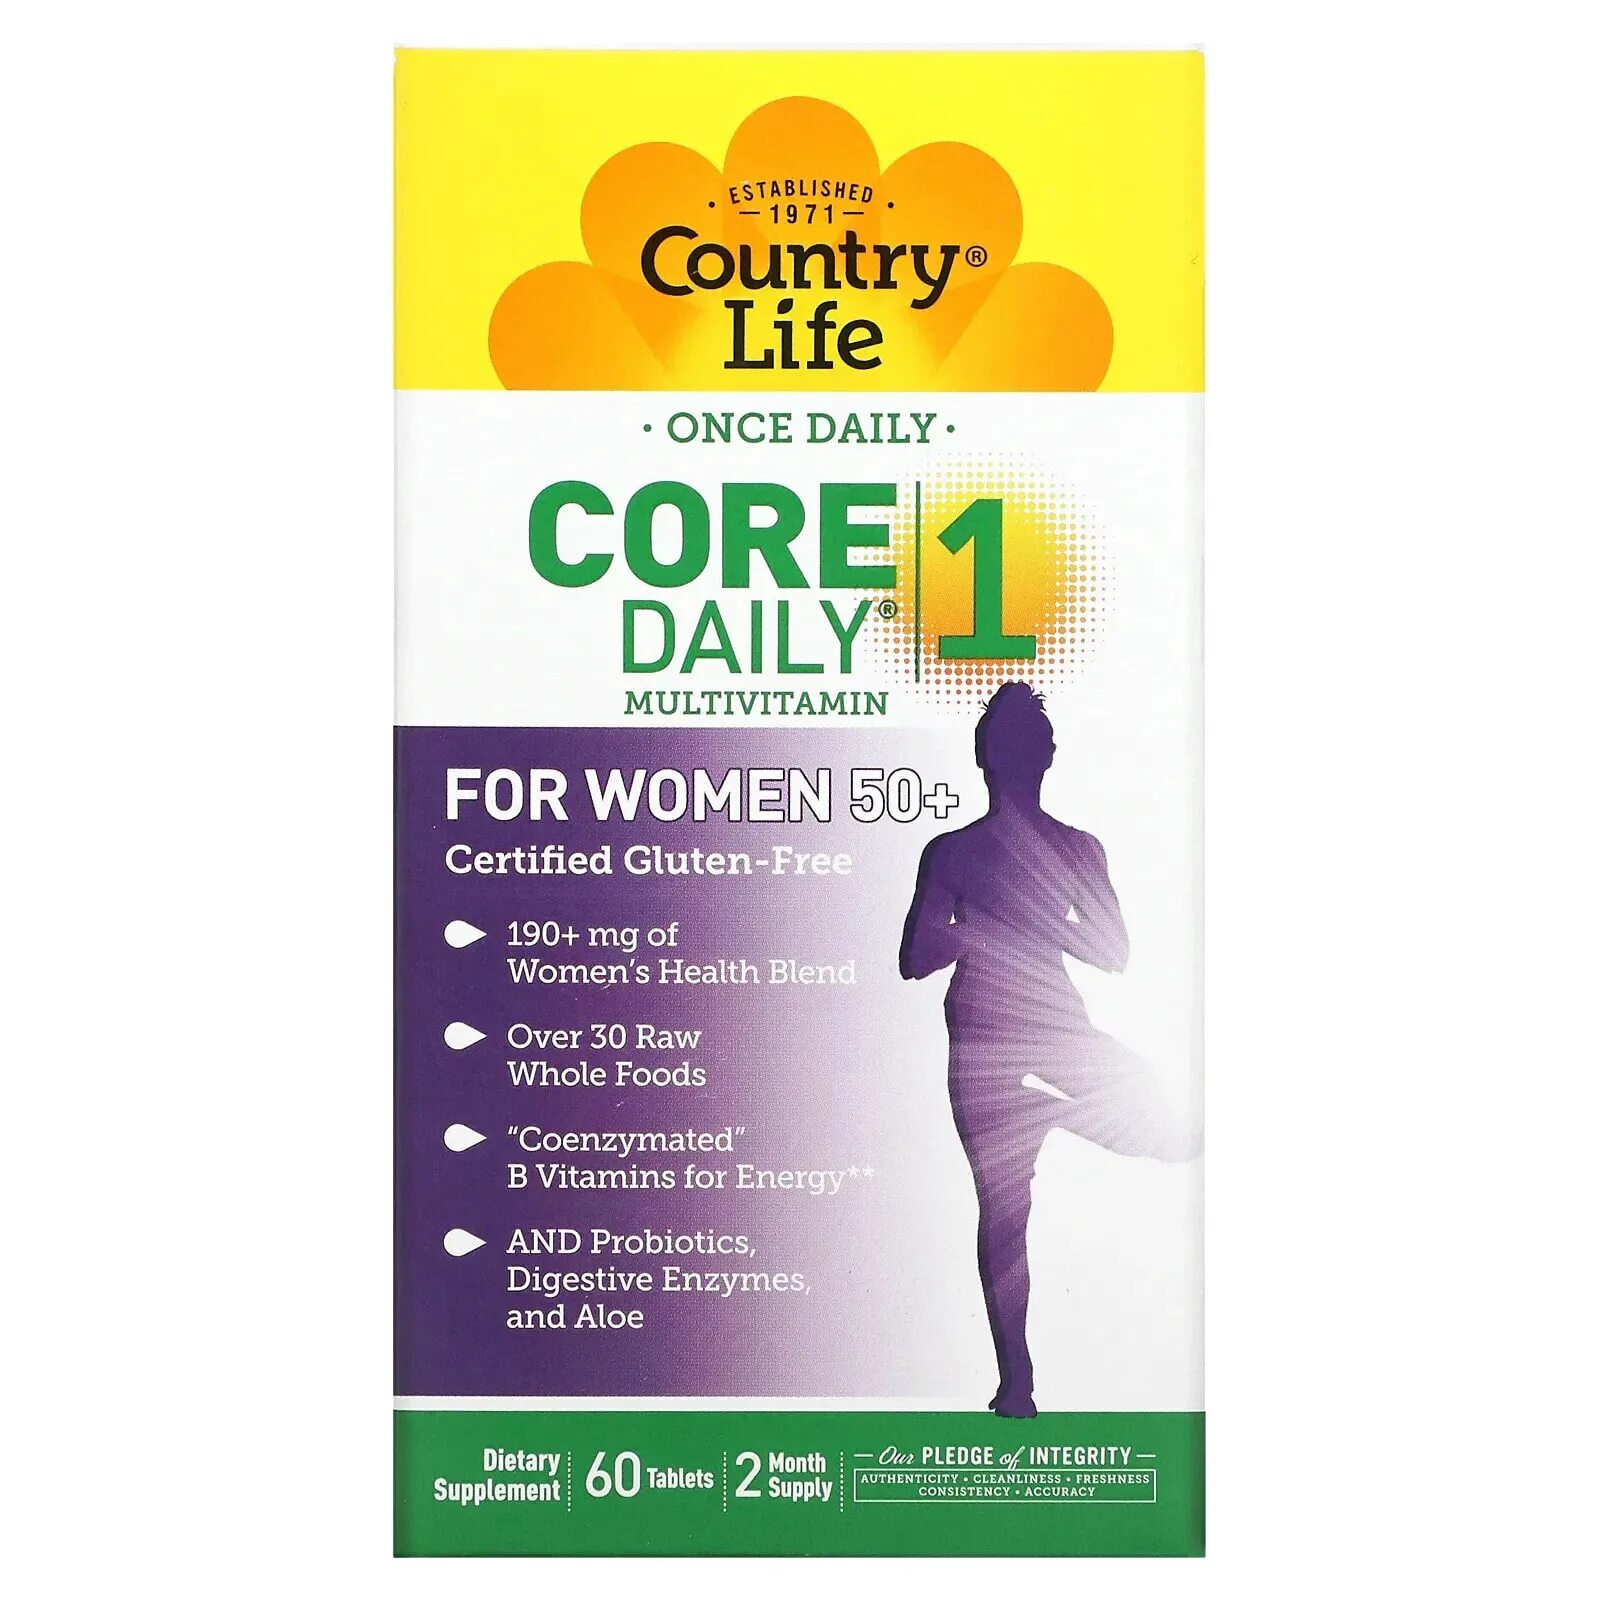 One Daily витамины для женщин 50+. Country Life Core Daily-1 Multivitamin for women 50+. Core Daily-1 Multivitamins men.